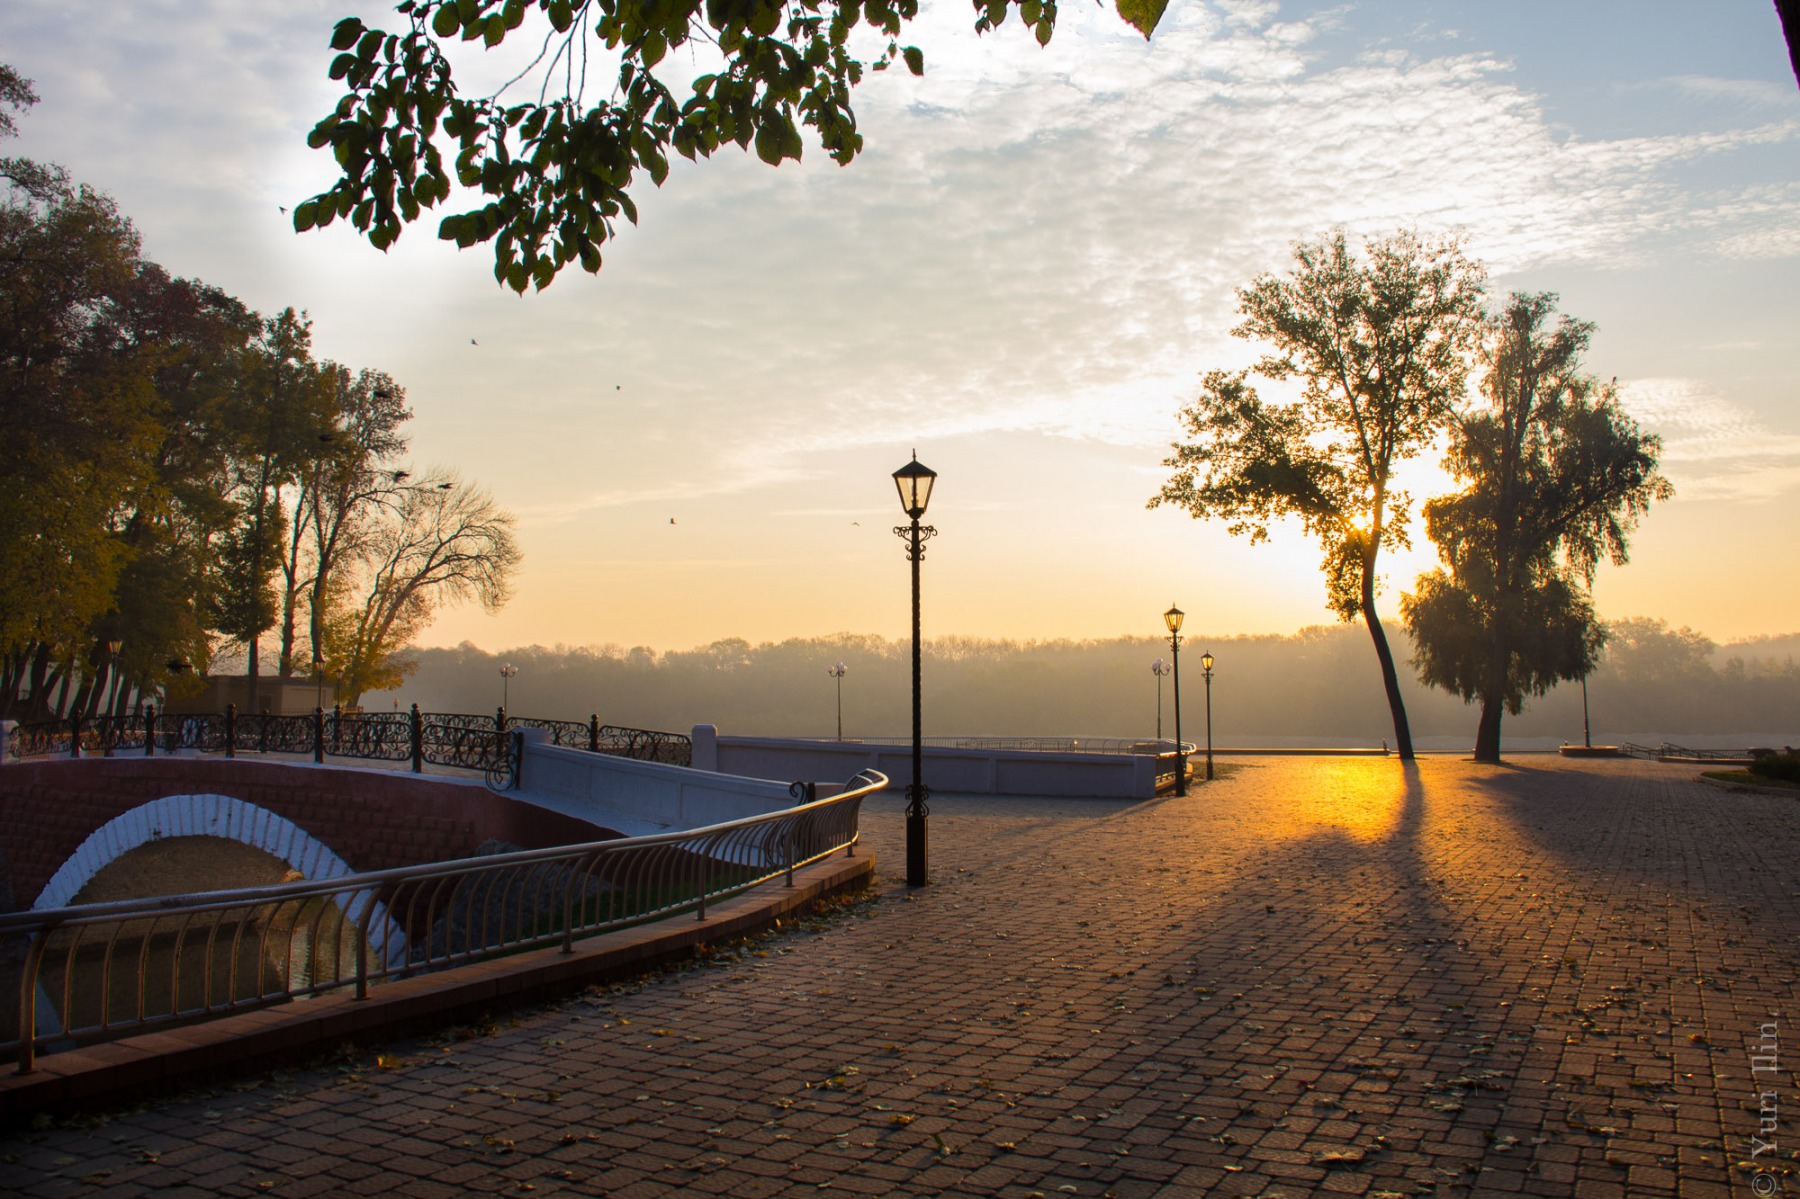 Утро в парке | Фотограф Юрий Ильин | foto.by фото.бай